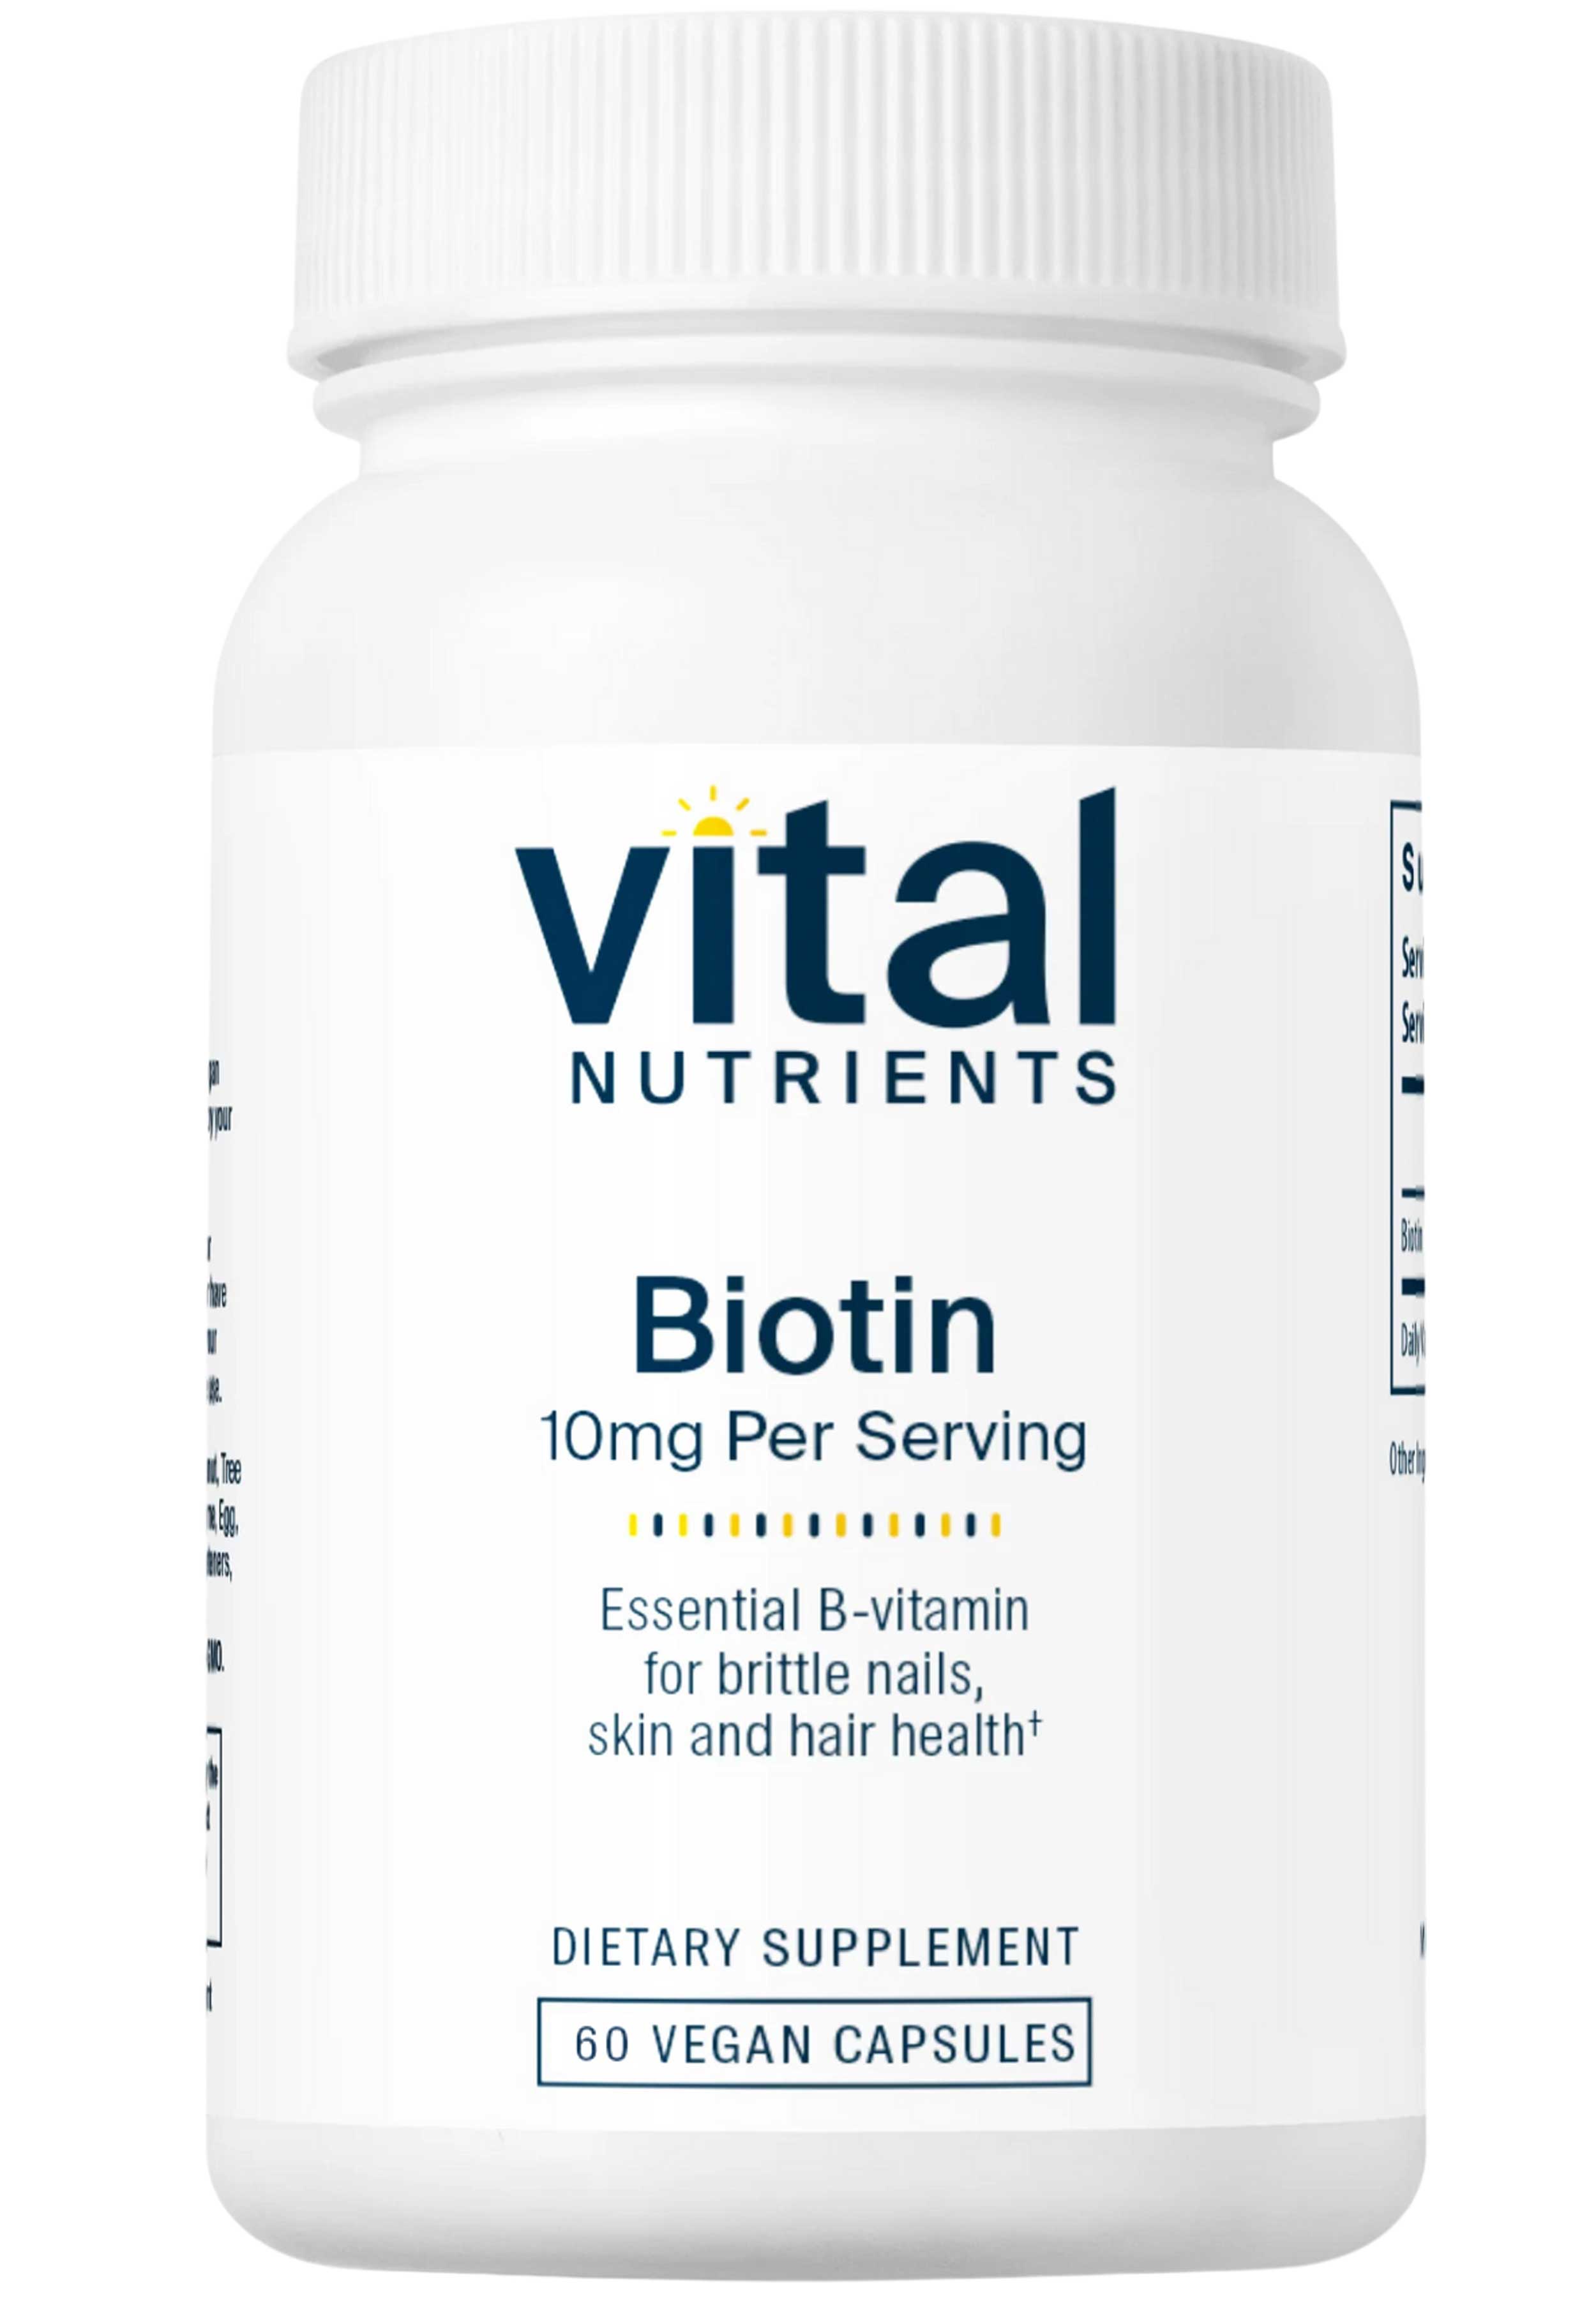 Vital Nutrients Biotin 10mg